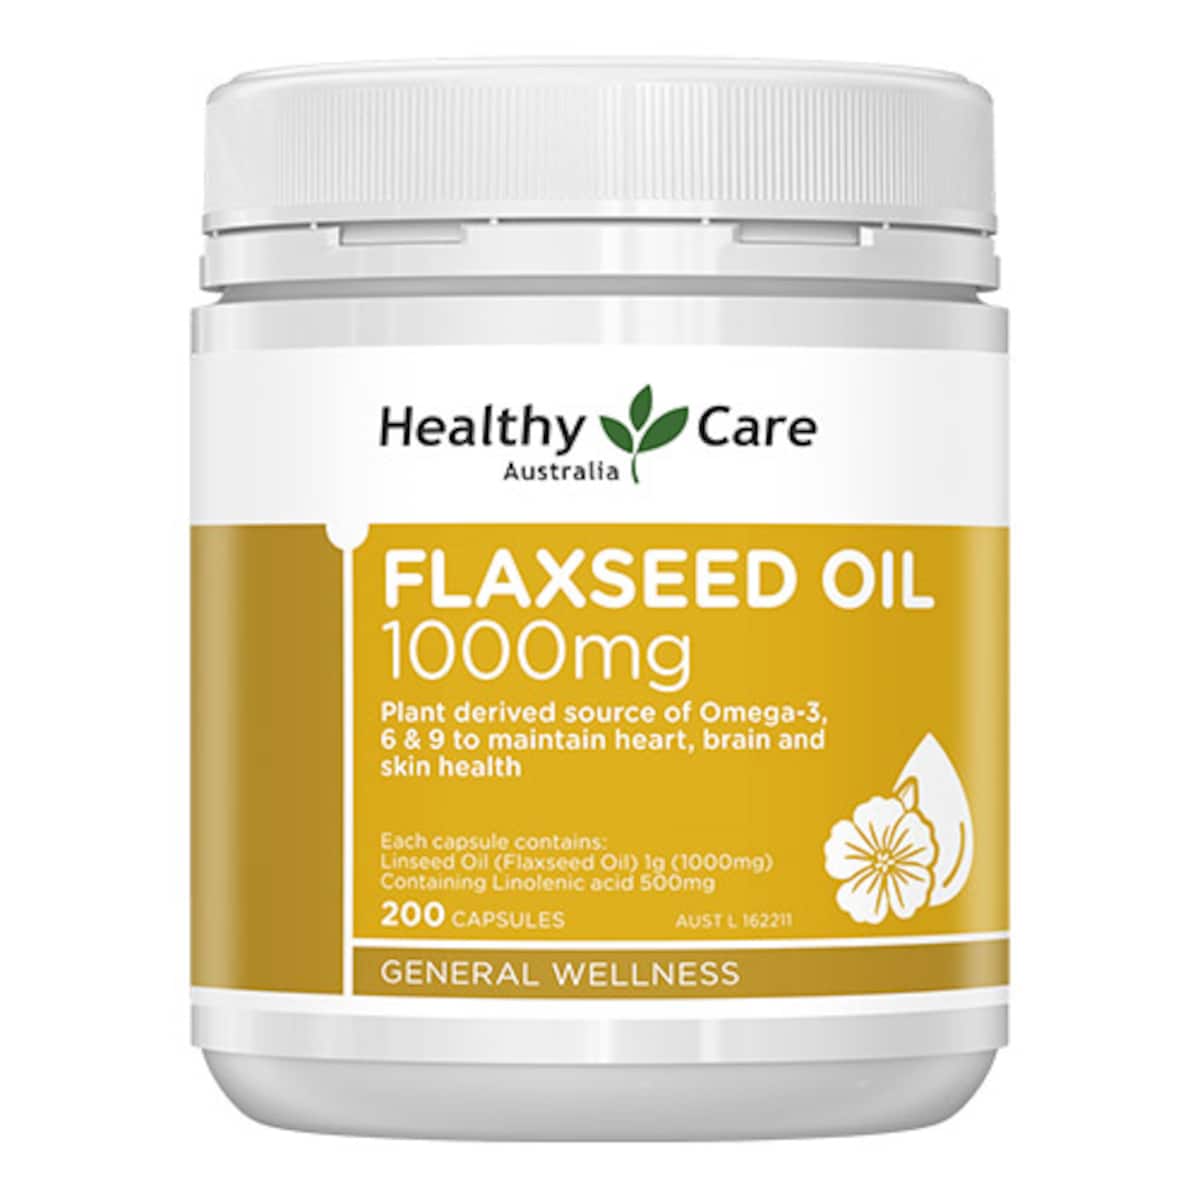 Healthy Care Flaxseed Oil 1000mg 200 Capsules Australia